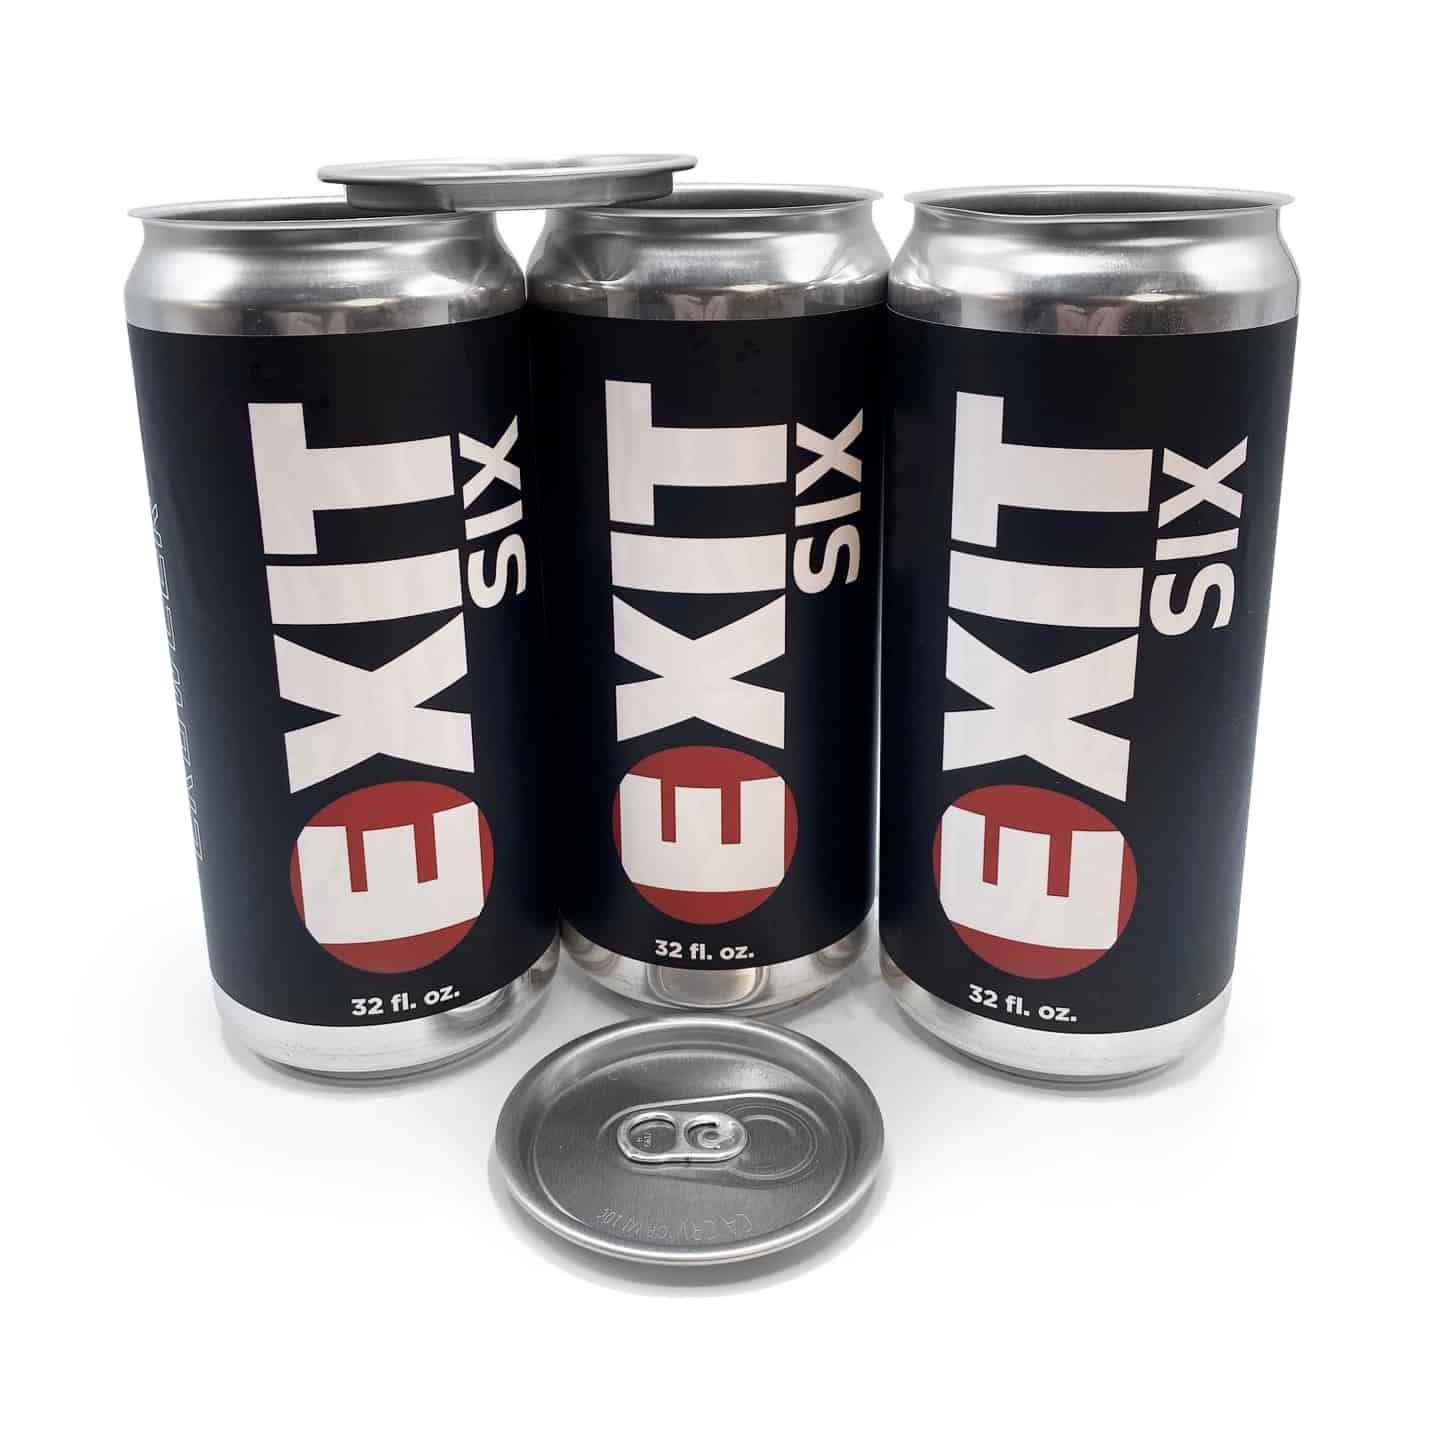 Exit Six Labeled Aluminum Cans